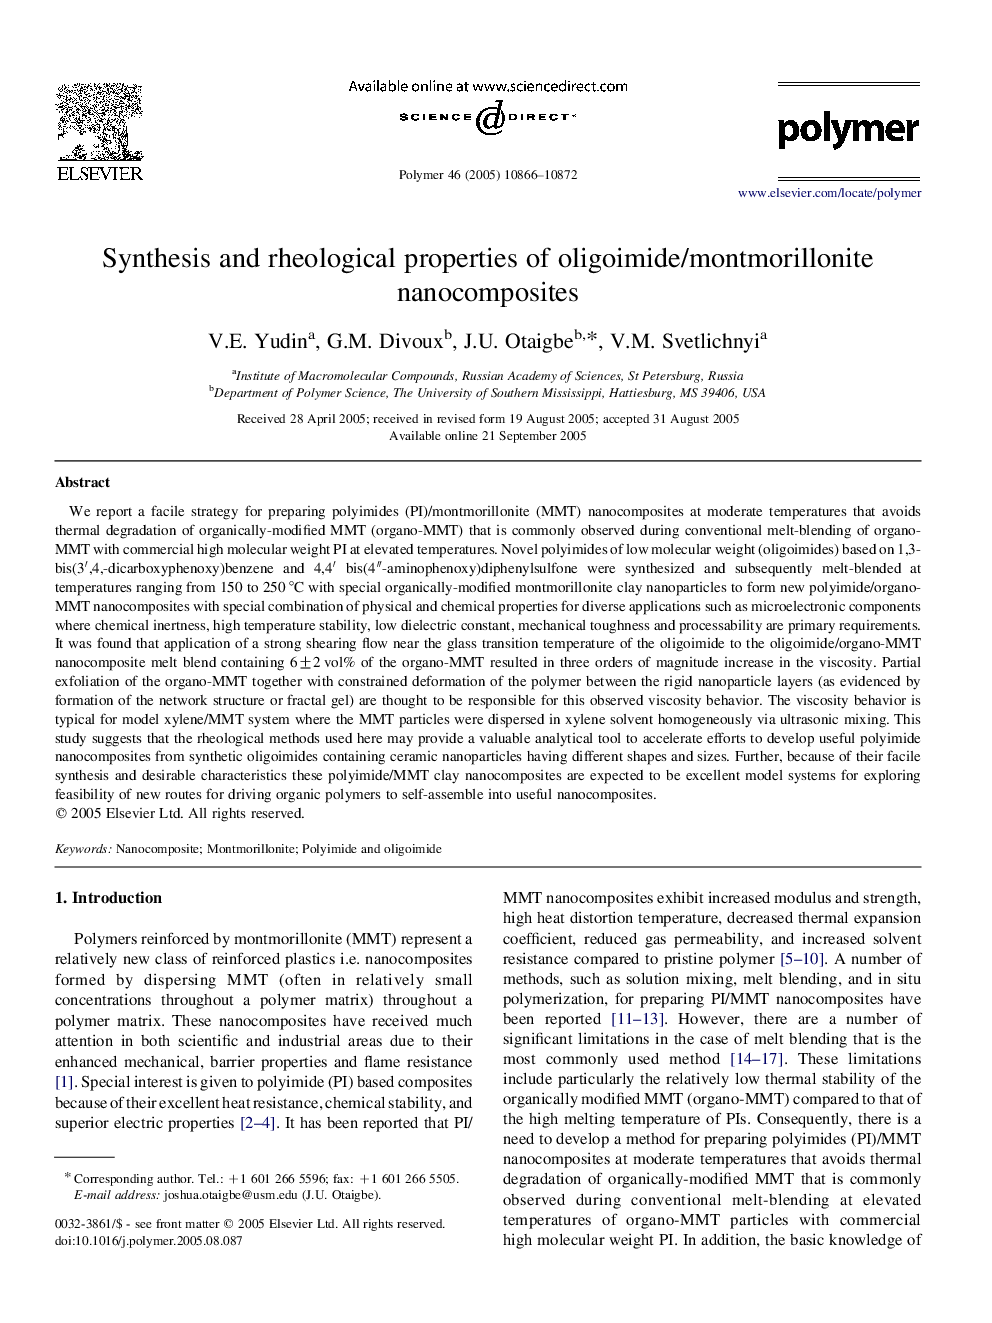 Synthesis and rheological properties of oligoimide/montmorillonite nanocomposites